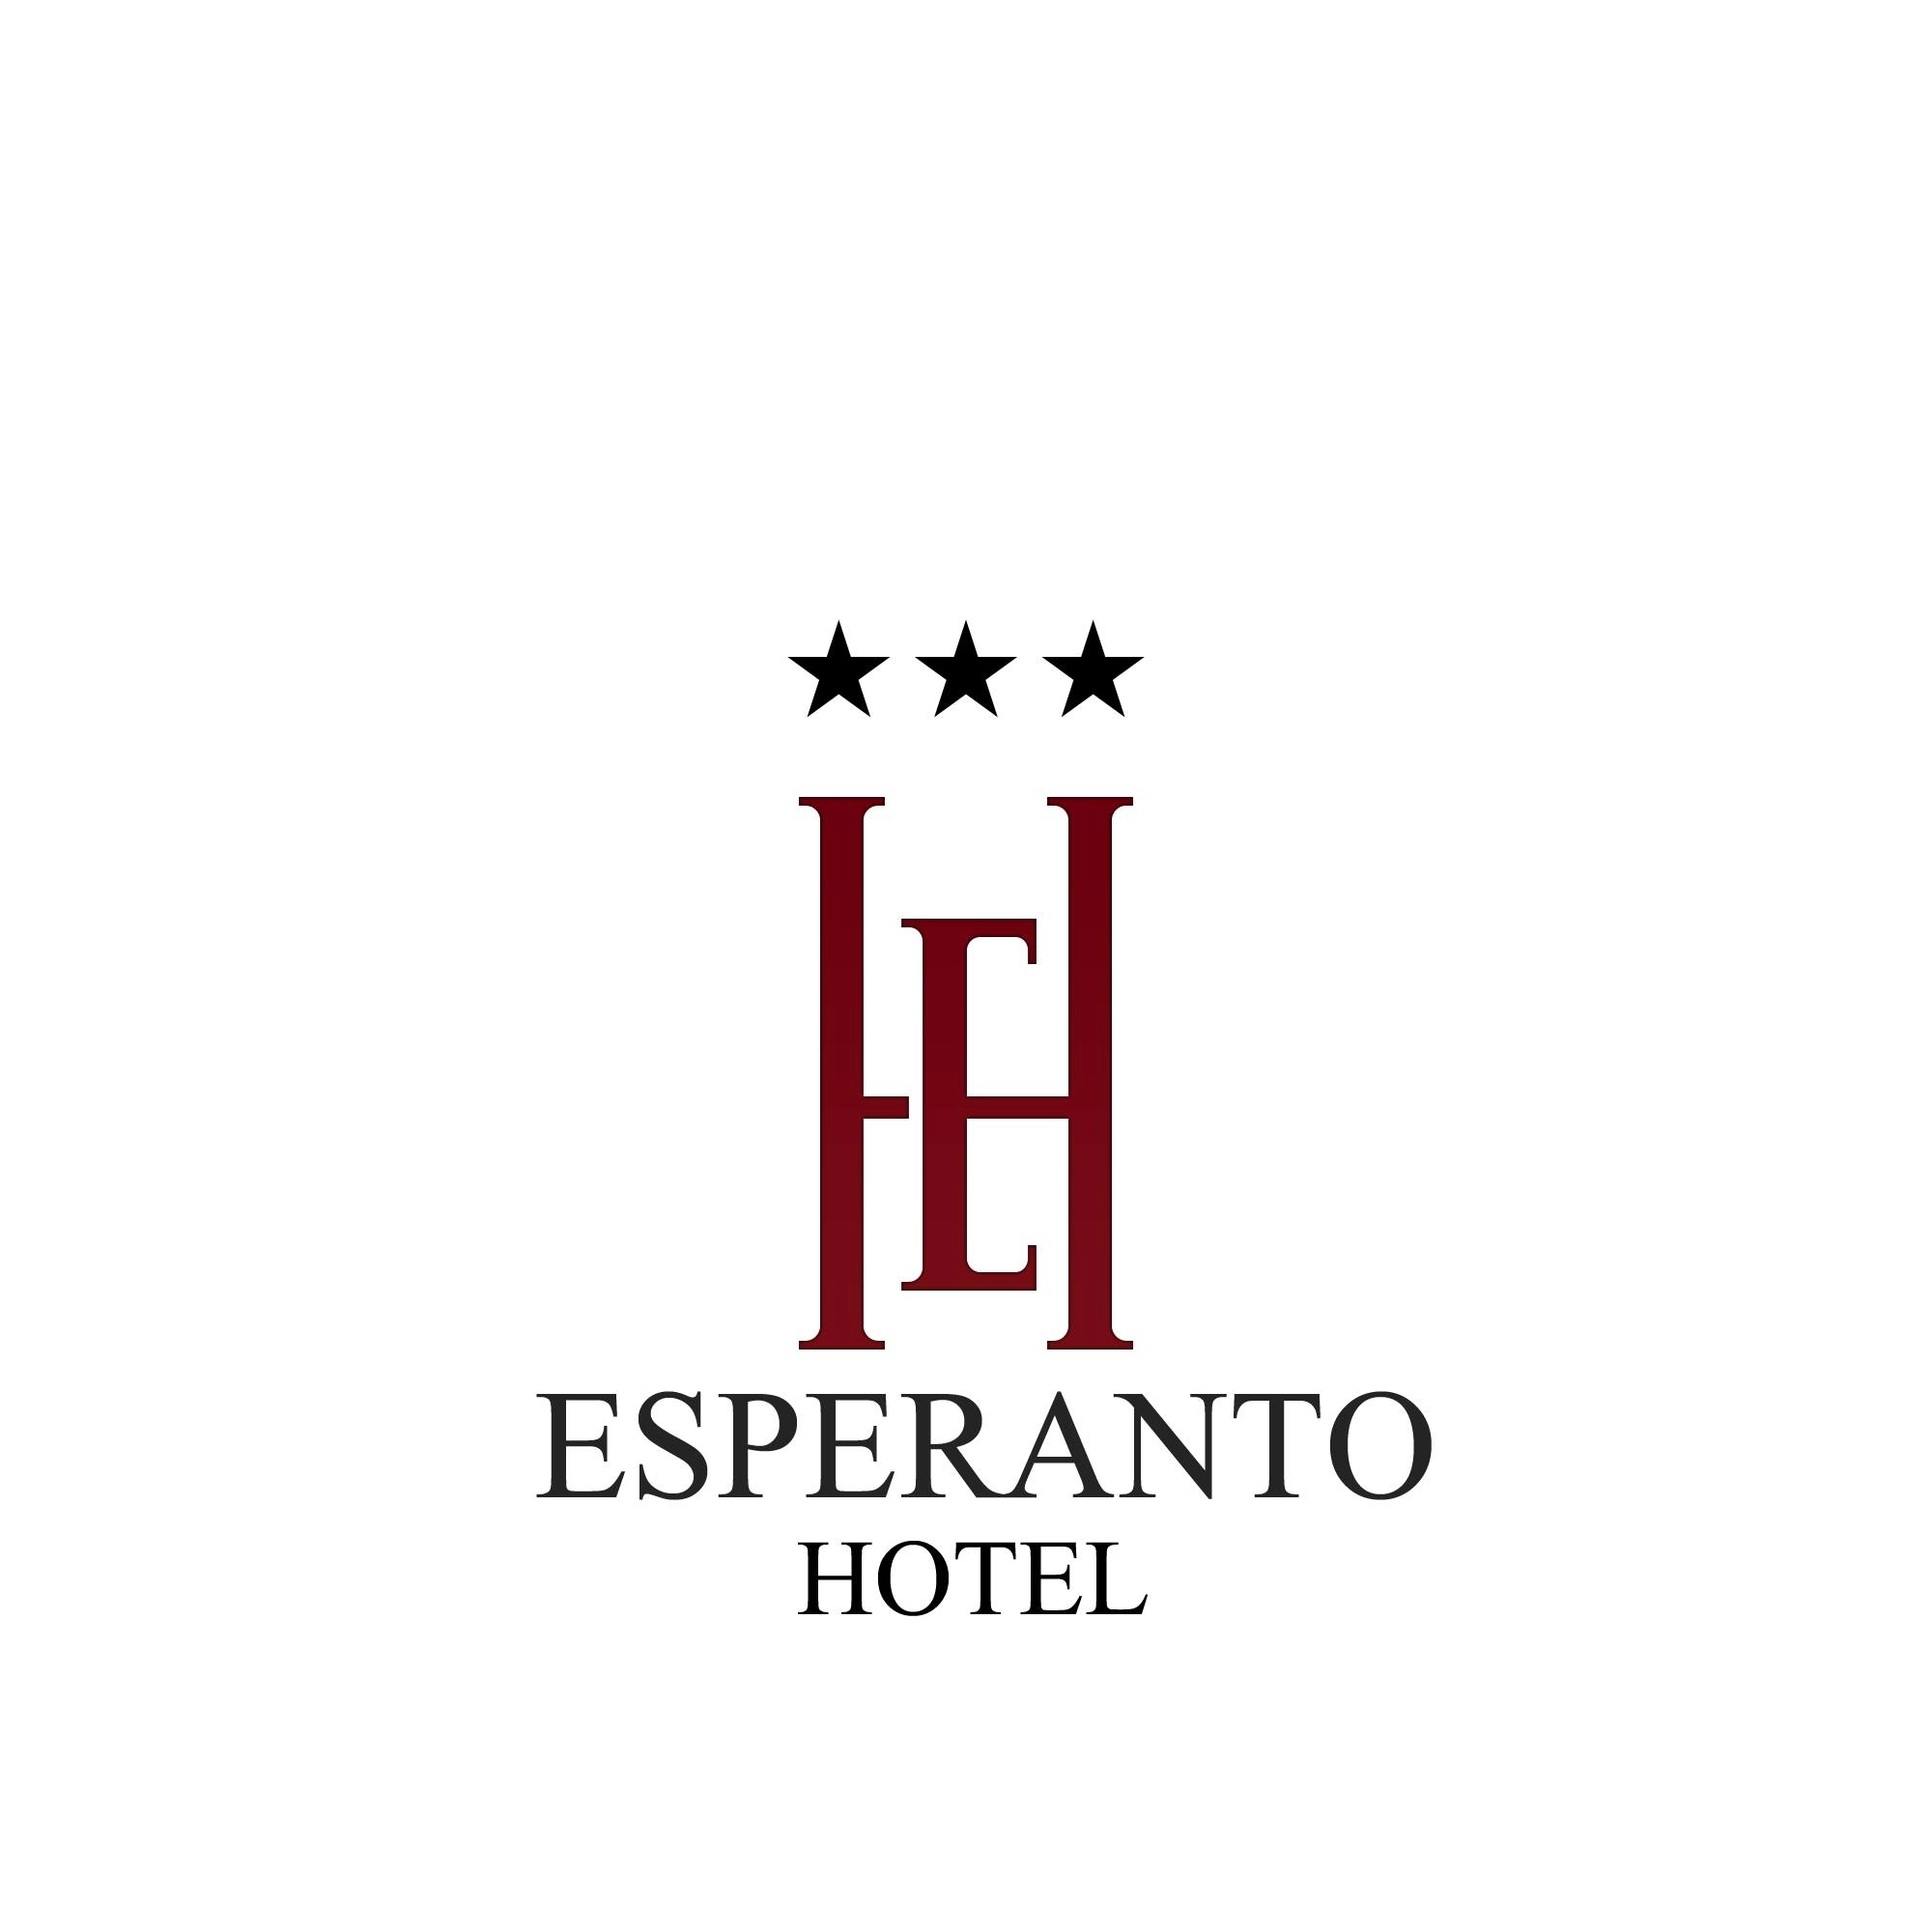 Hotel Esperanto***